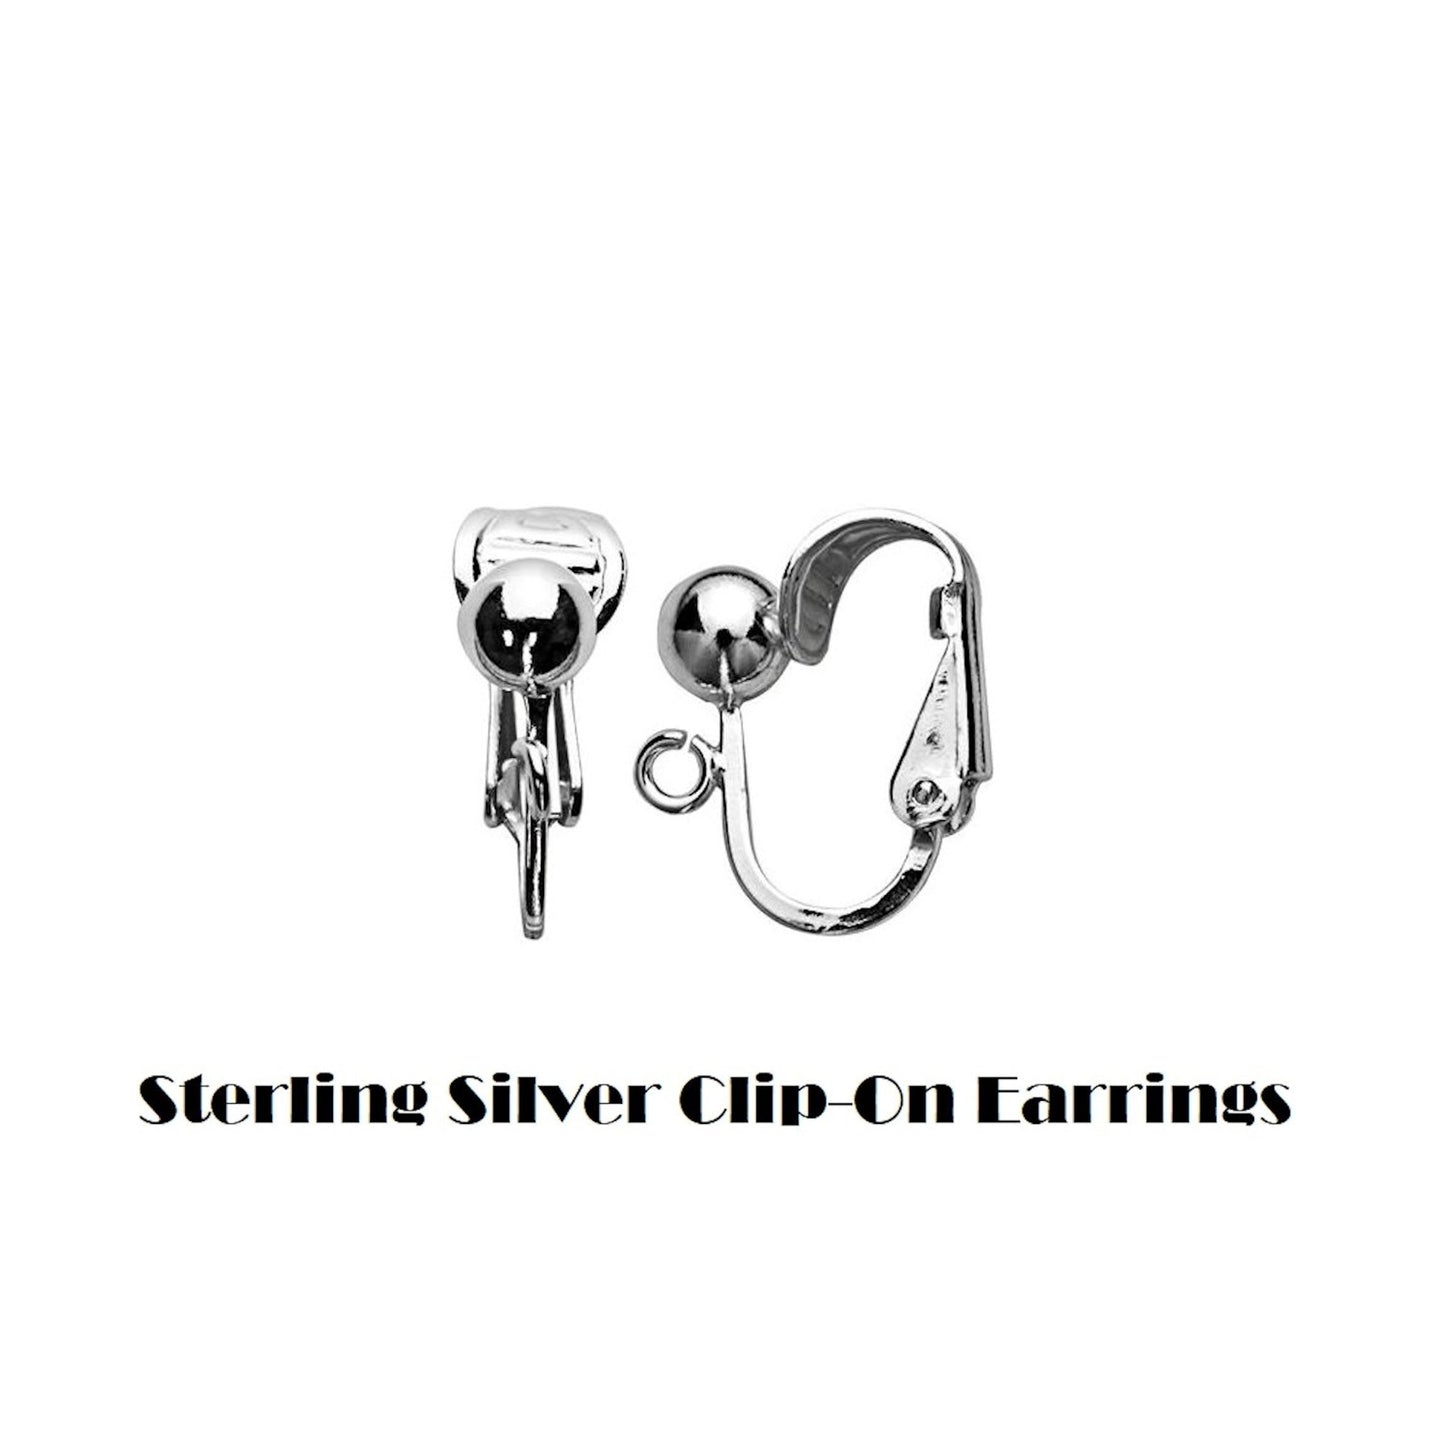 Murano Glass Mint Green Rectangle Silver Earrings by JKC Murano - JKC Murano